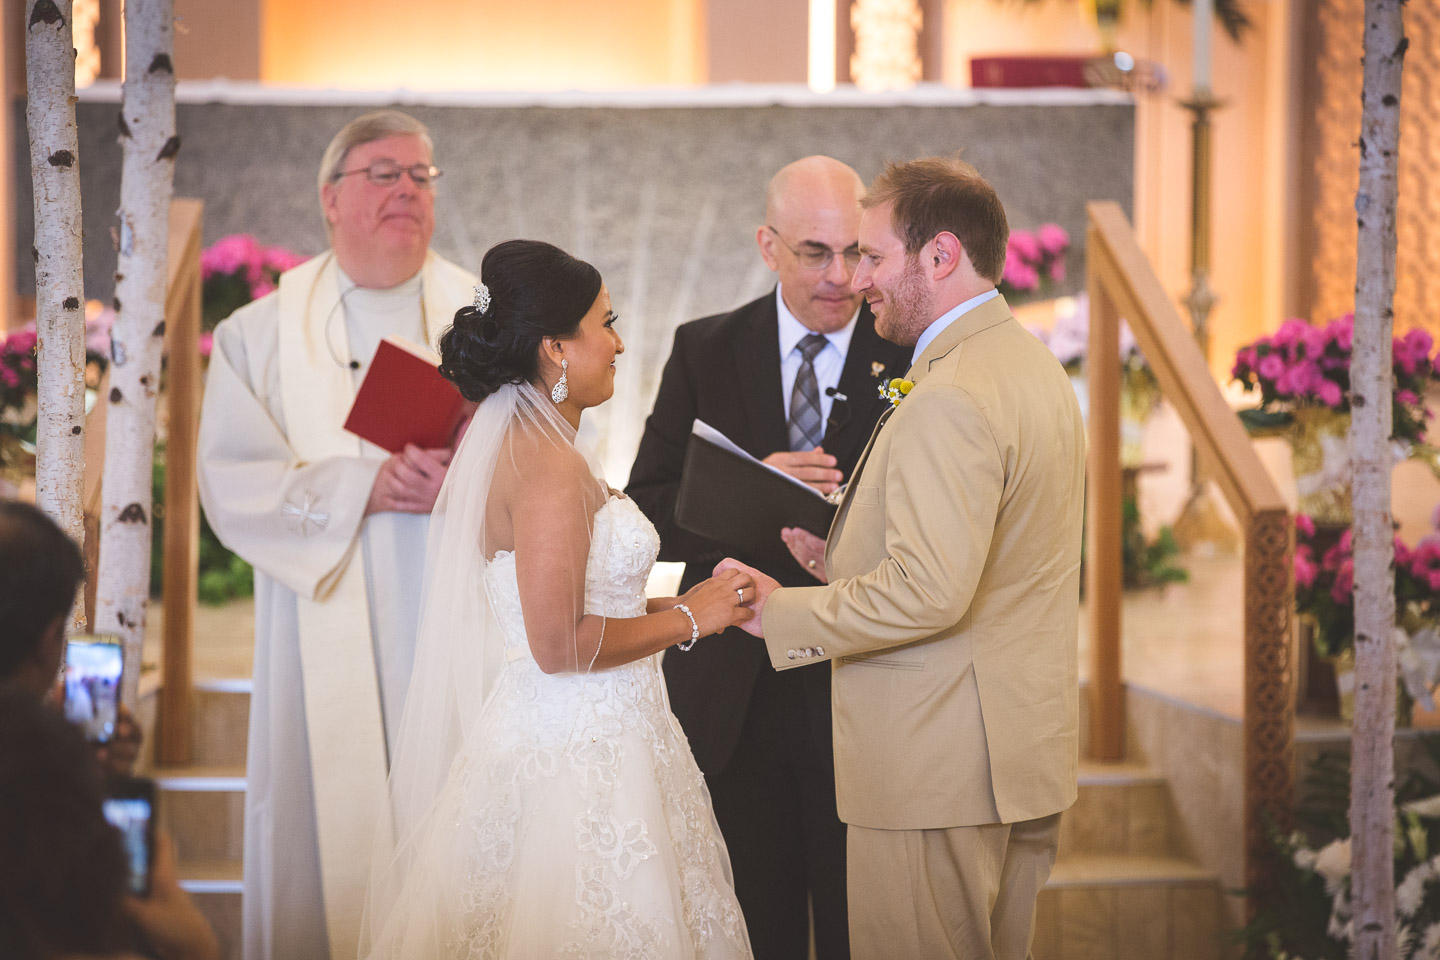 birmingham-michigan-st.-regis-catholic-church-jewish-interfaith-bride-groom-exchange-rings